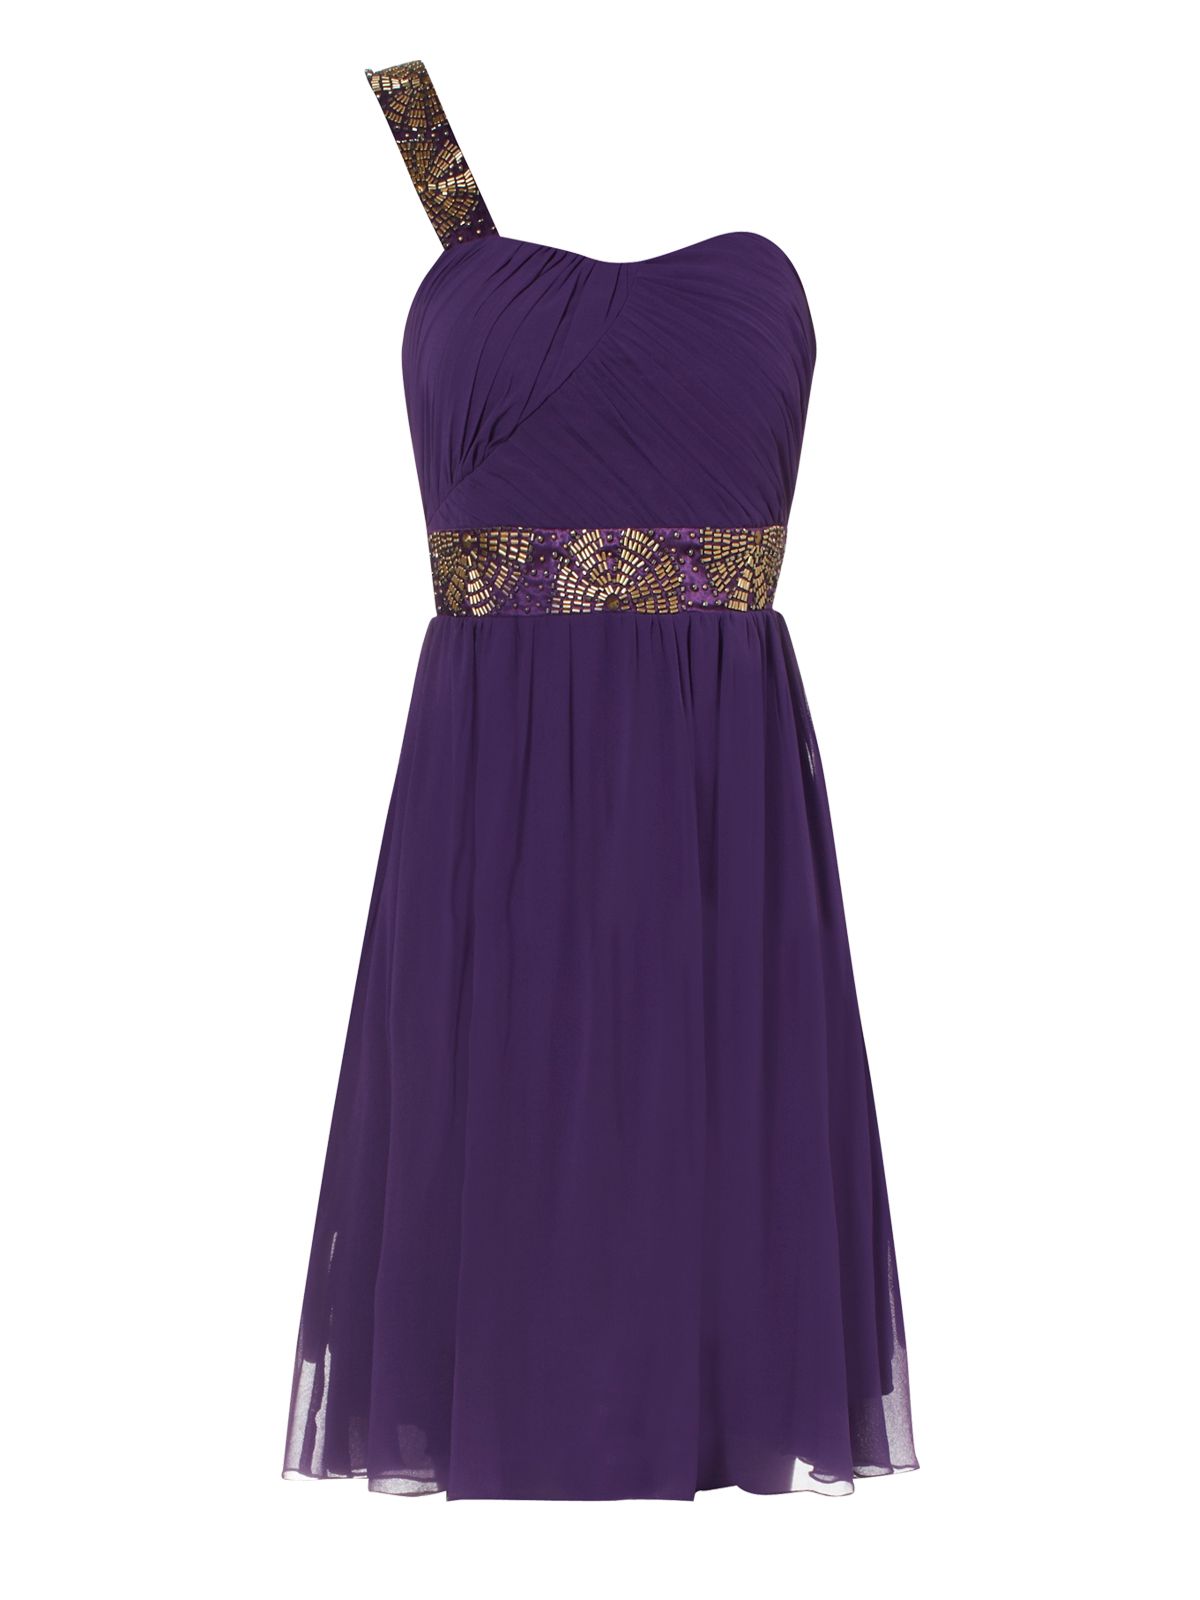 Jane norman Purple One Shoulder Embellished Prom Dress in Purple | Lyst